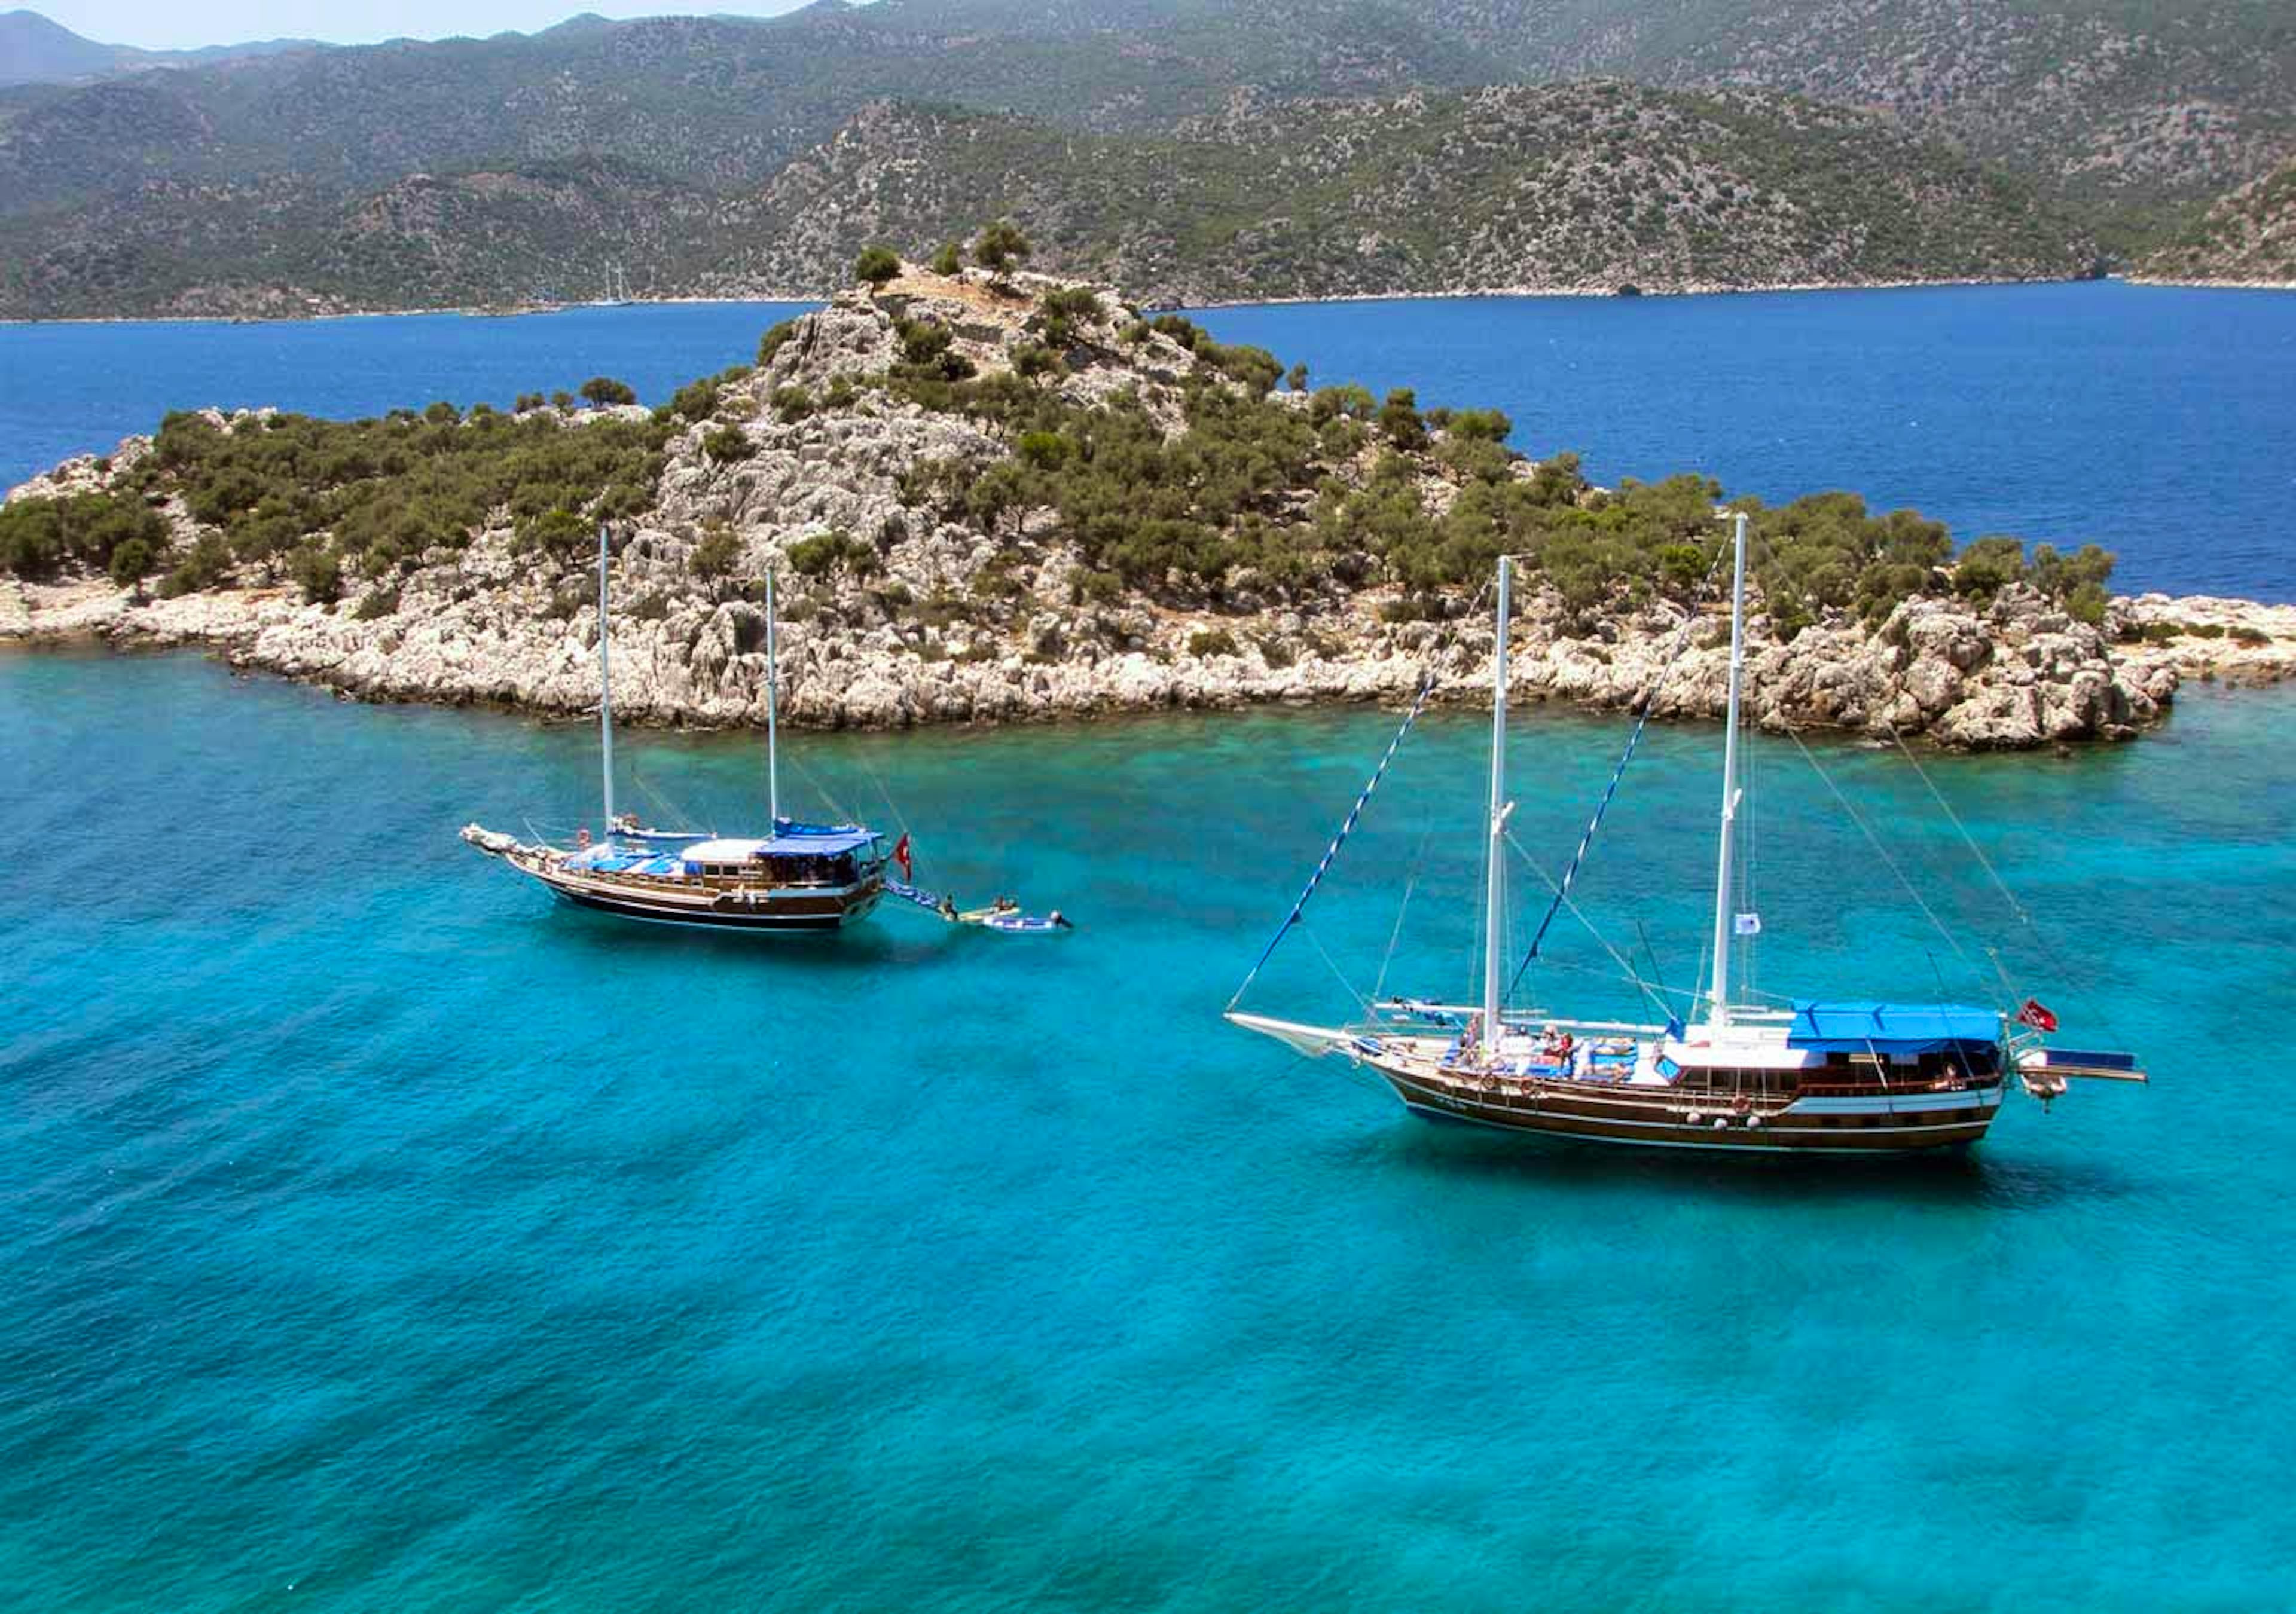 Charter a boat in Marmaris, Turkey